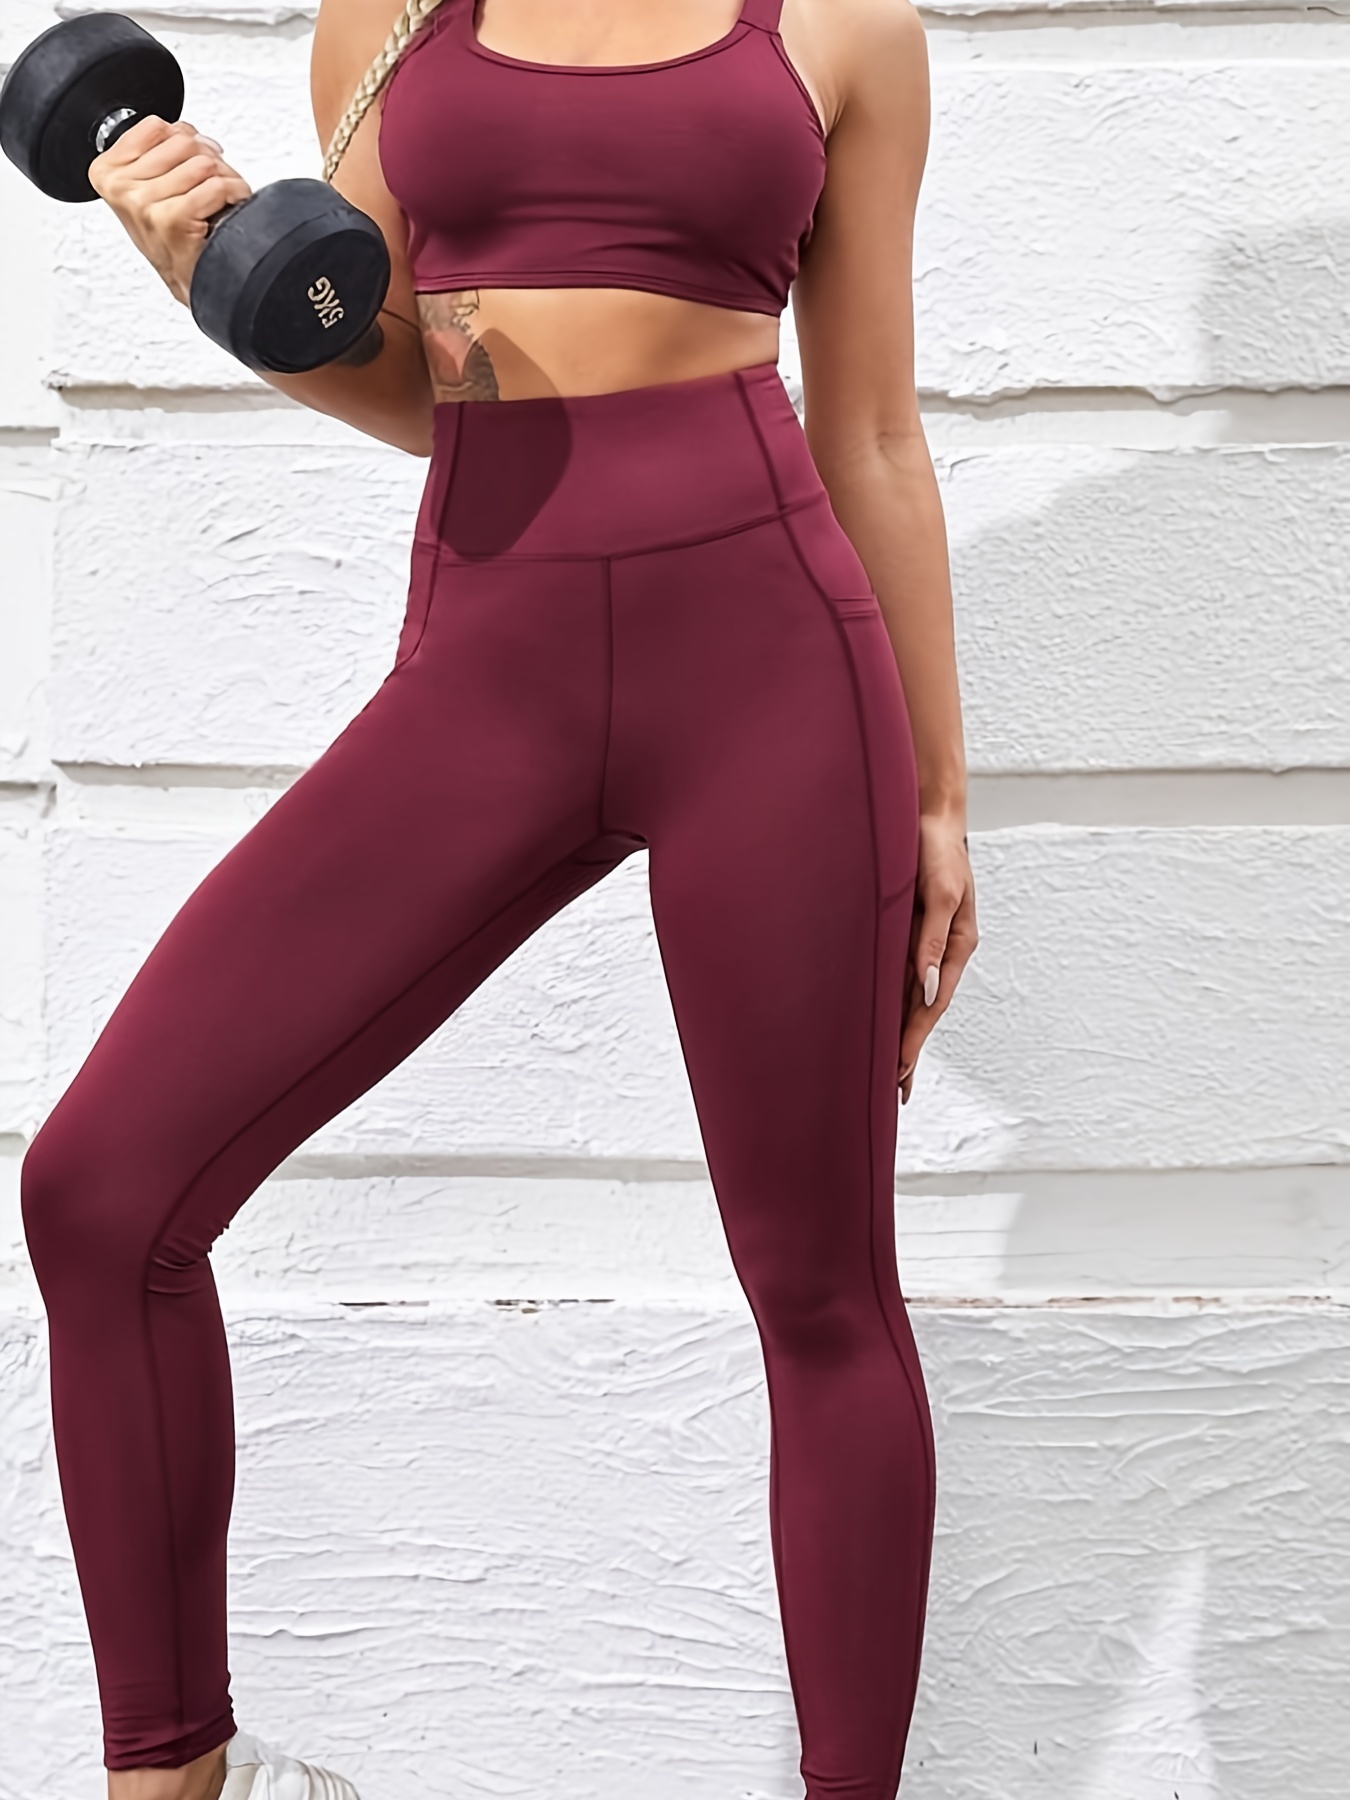 Traje de deporte femenino ropa de Fitness para mujer ropa deportiva conjunto  de Yoga gimnasio Jogging Suits ropa deportiva Runni